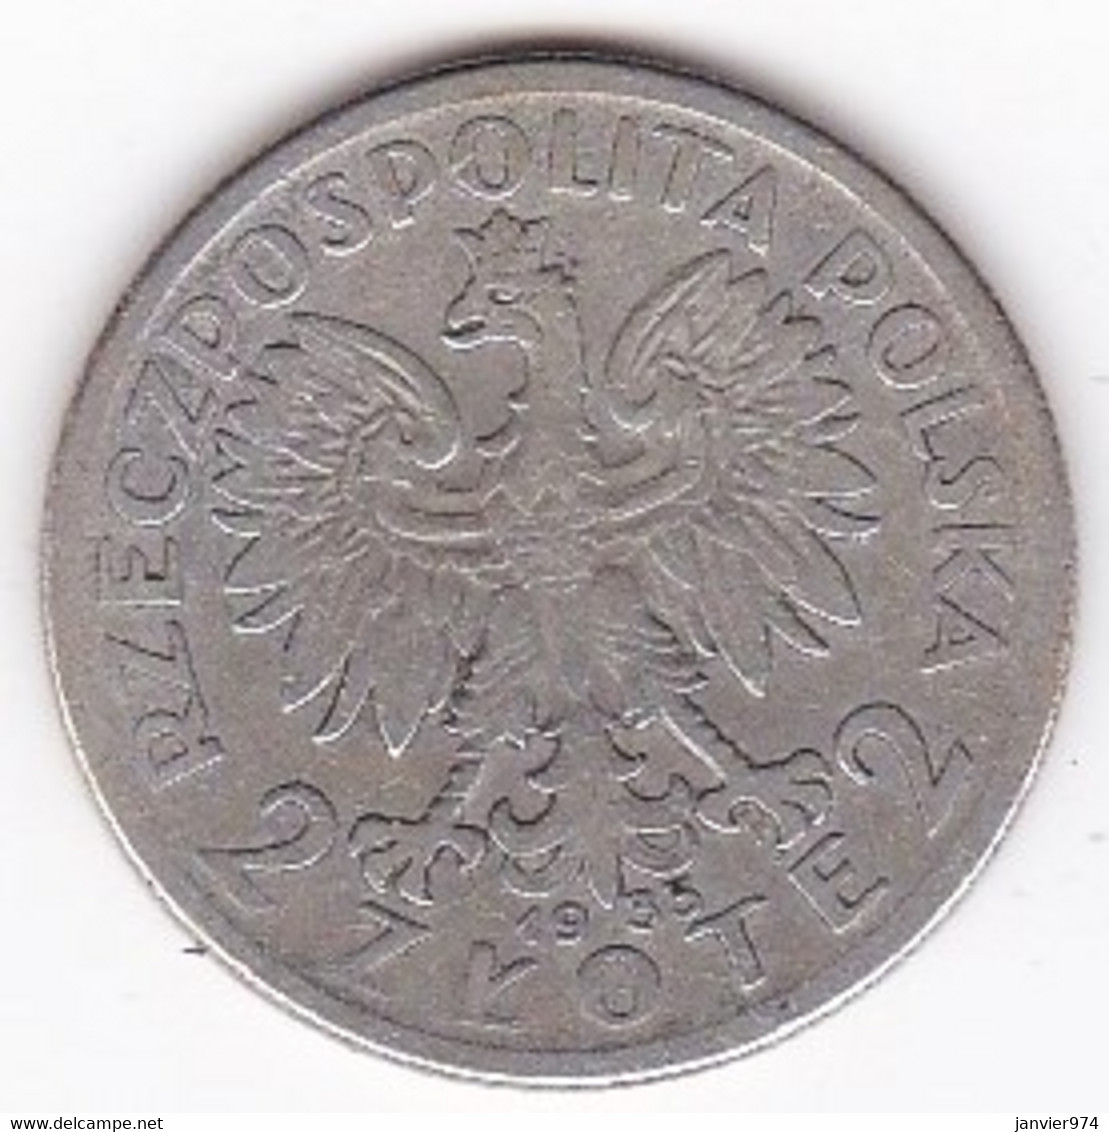 POLOGNE . 2 ZLOTE 1933. ARGENT - Pologne